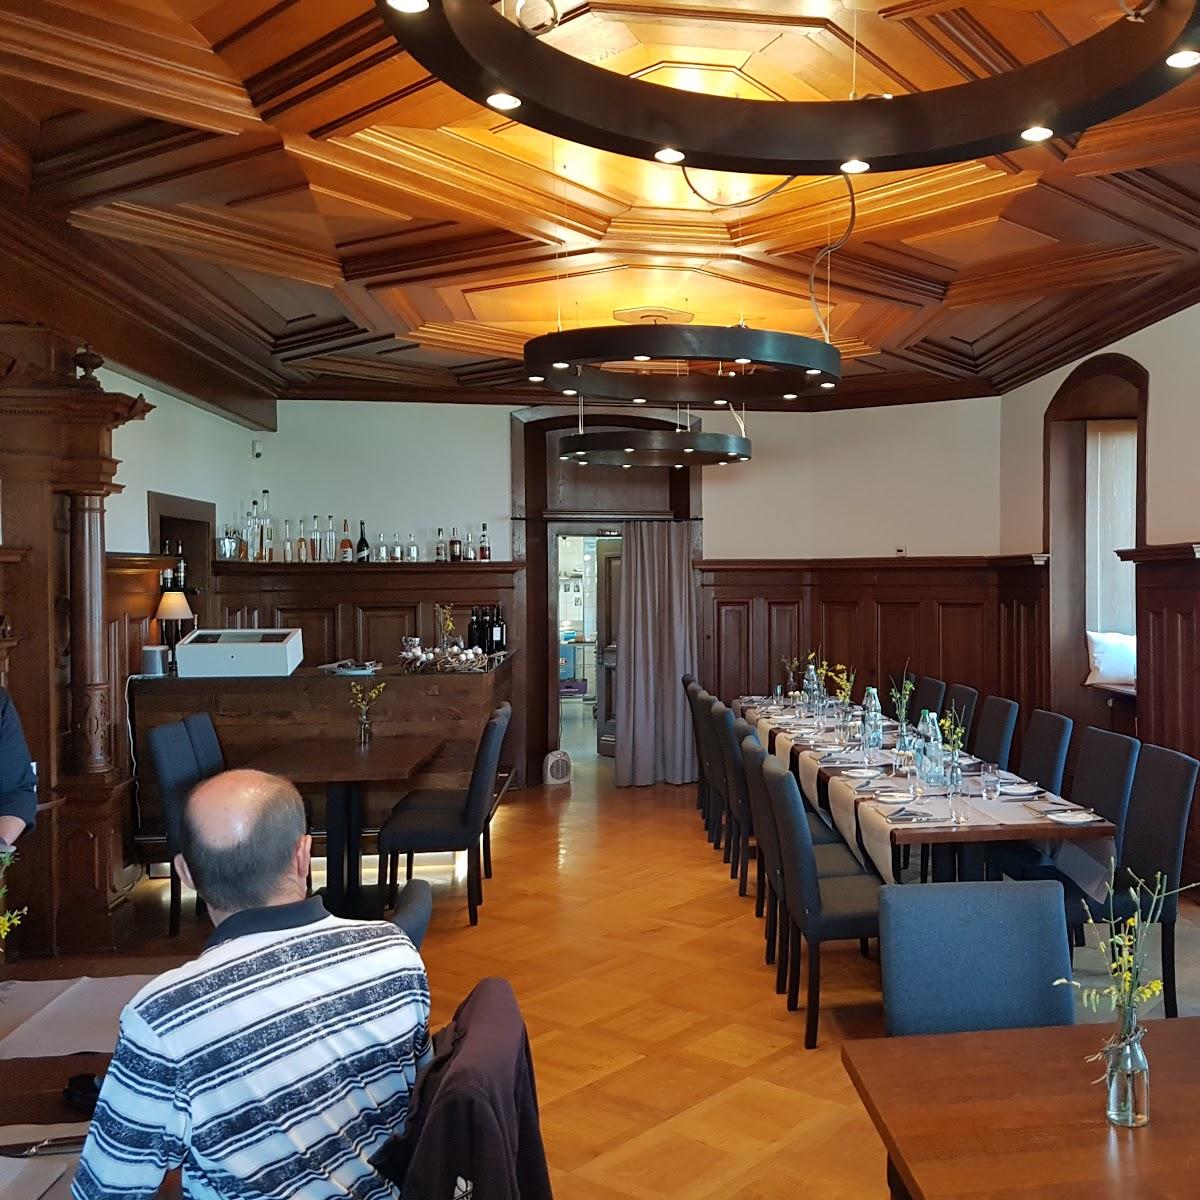 Restaurant "Restaurant Schloss Seeburg" in Kreuzlingen